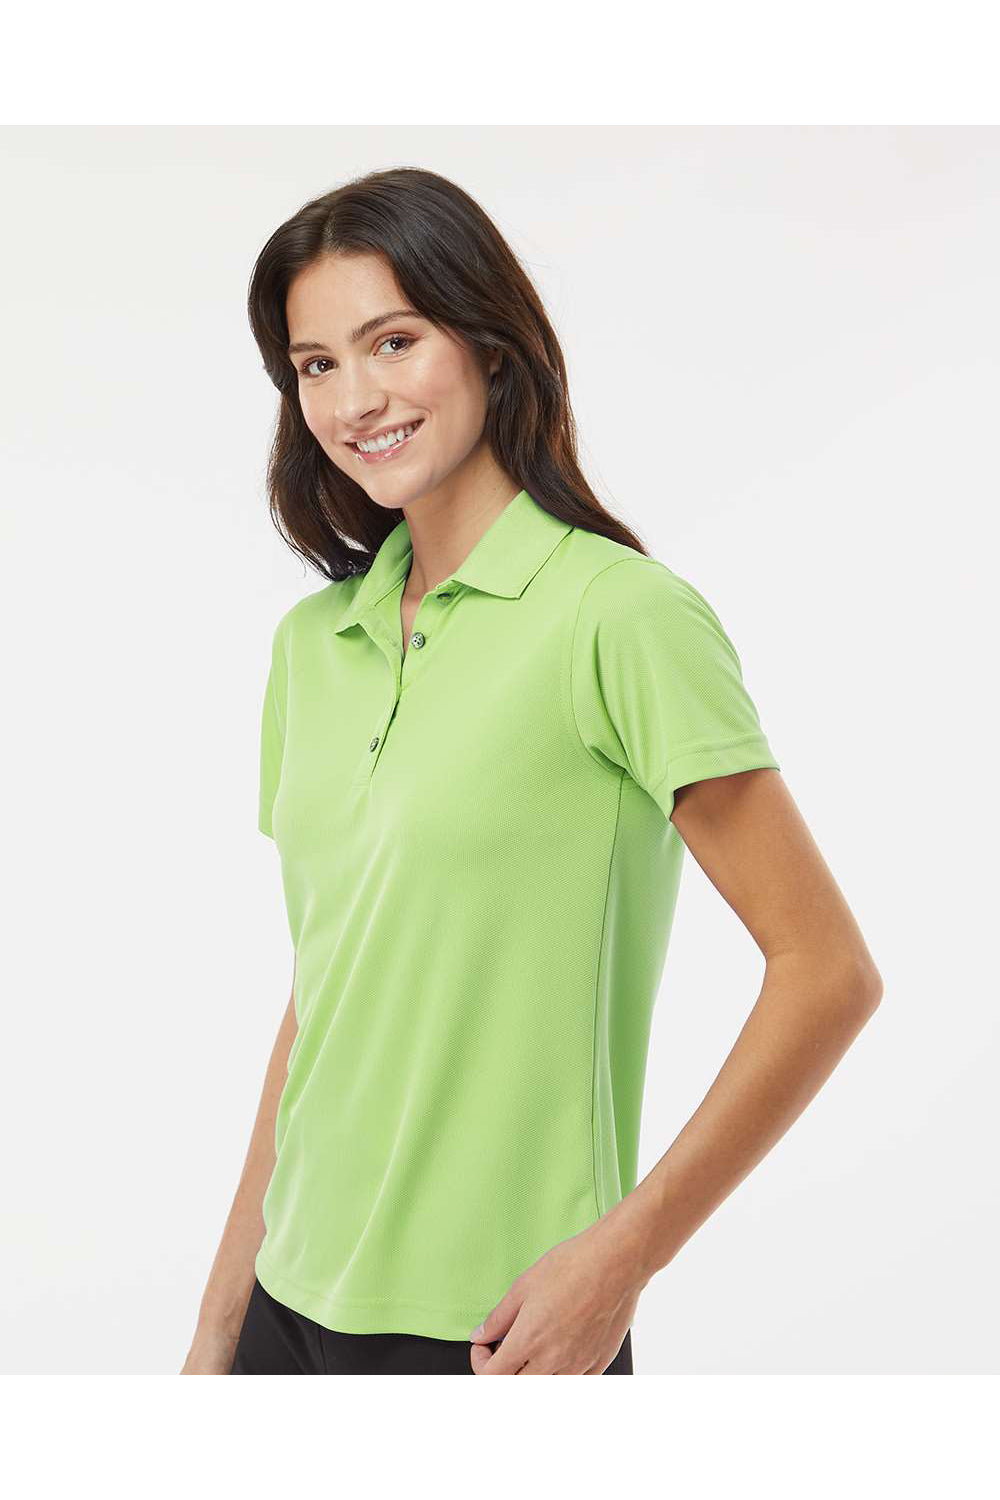 Paragon 104 Womens Saratoga Performance Mini Mesh Short Sleeve Polo Shirt Kiwi Green Model Side